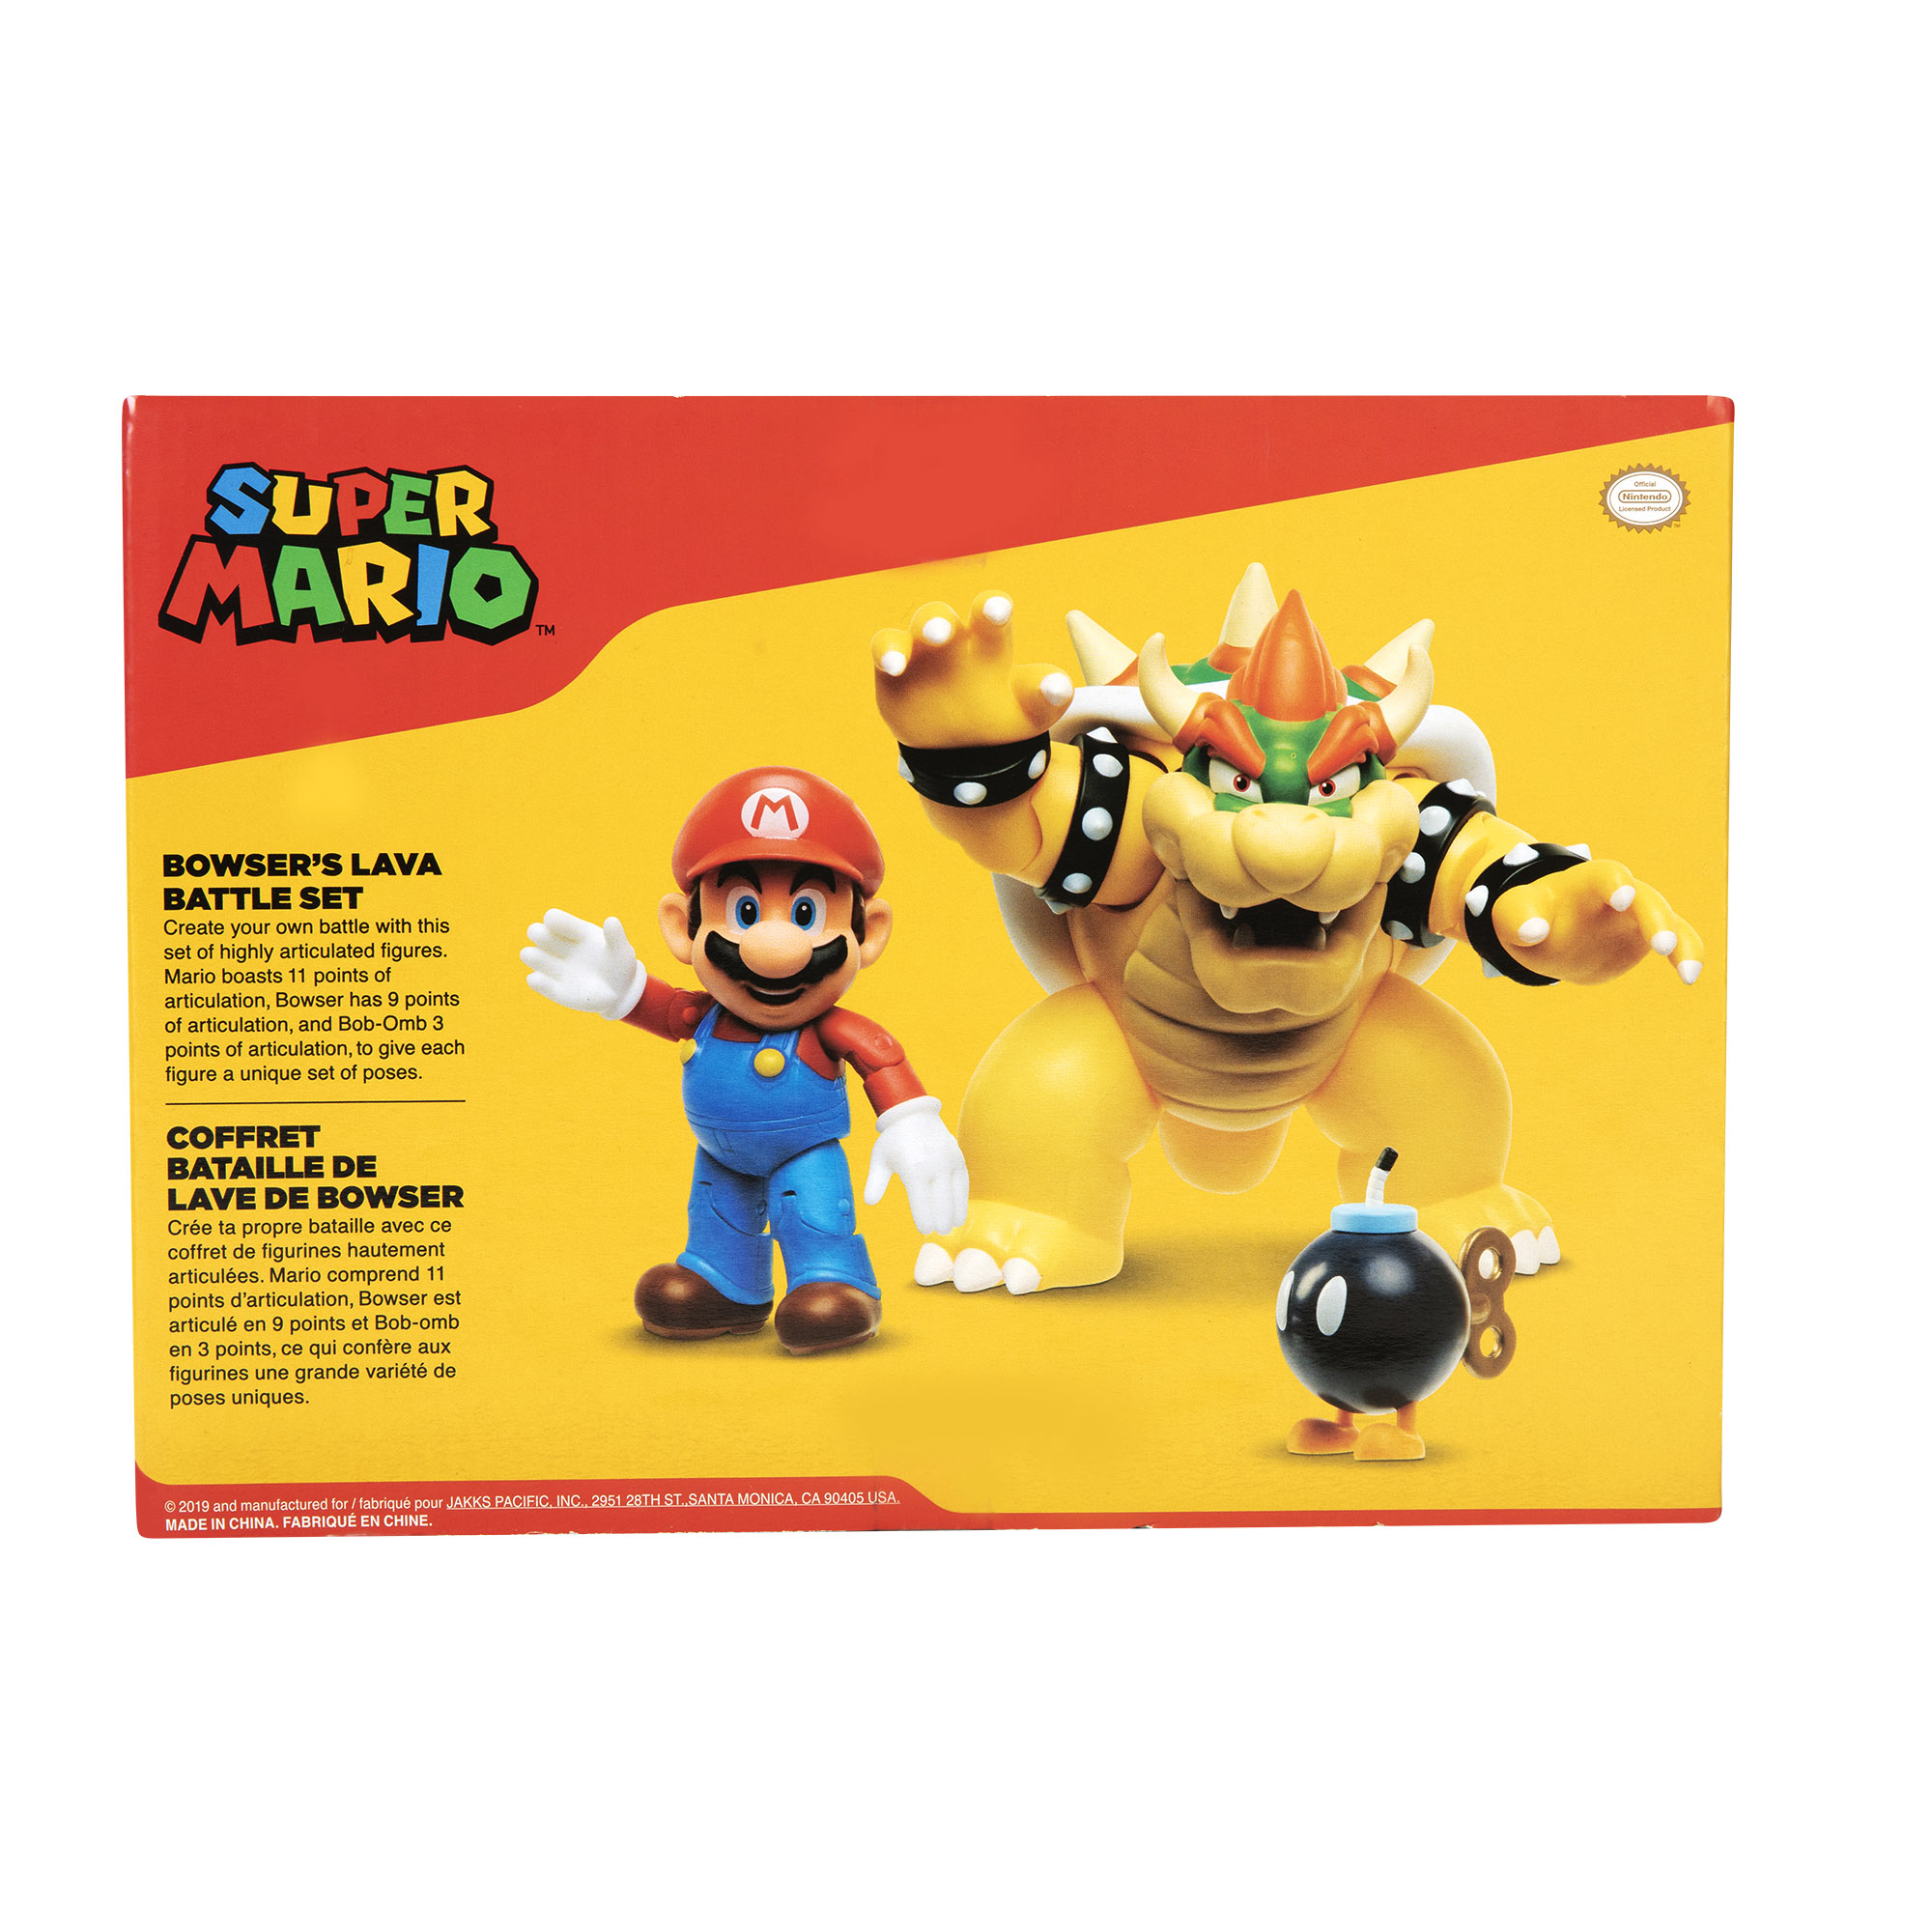 Super Mario vs. Bowser Diorama set - Super Mario